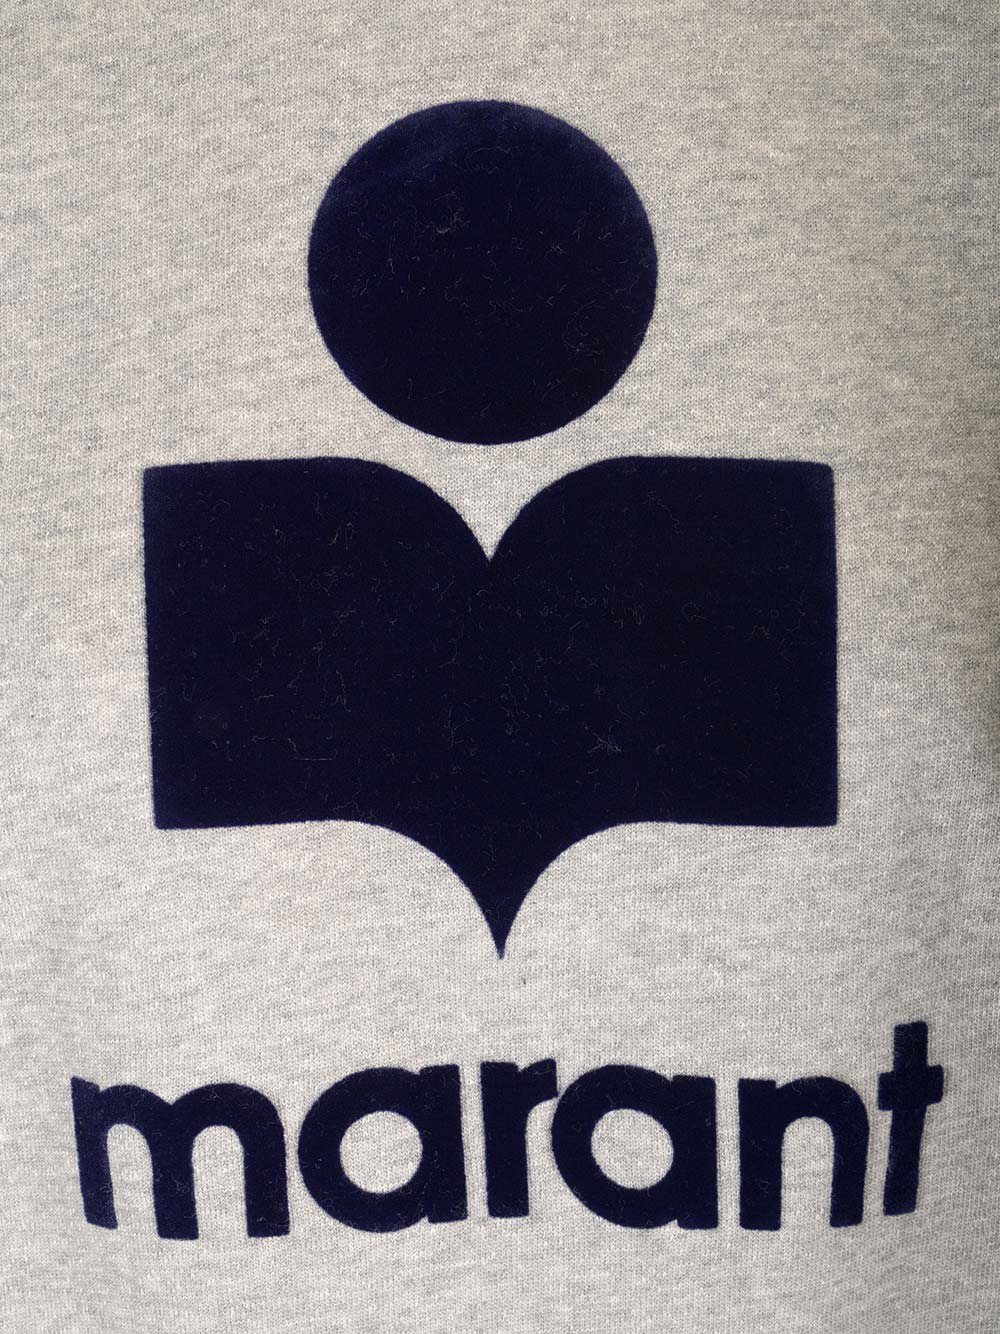 Shop Marant Etoile Mobyli Crewneck Sweatshirt In Multicolour